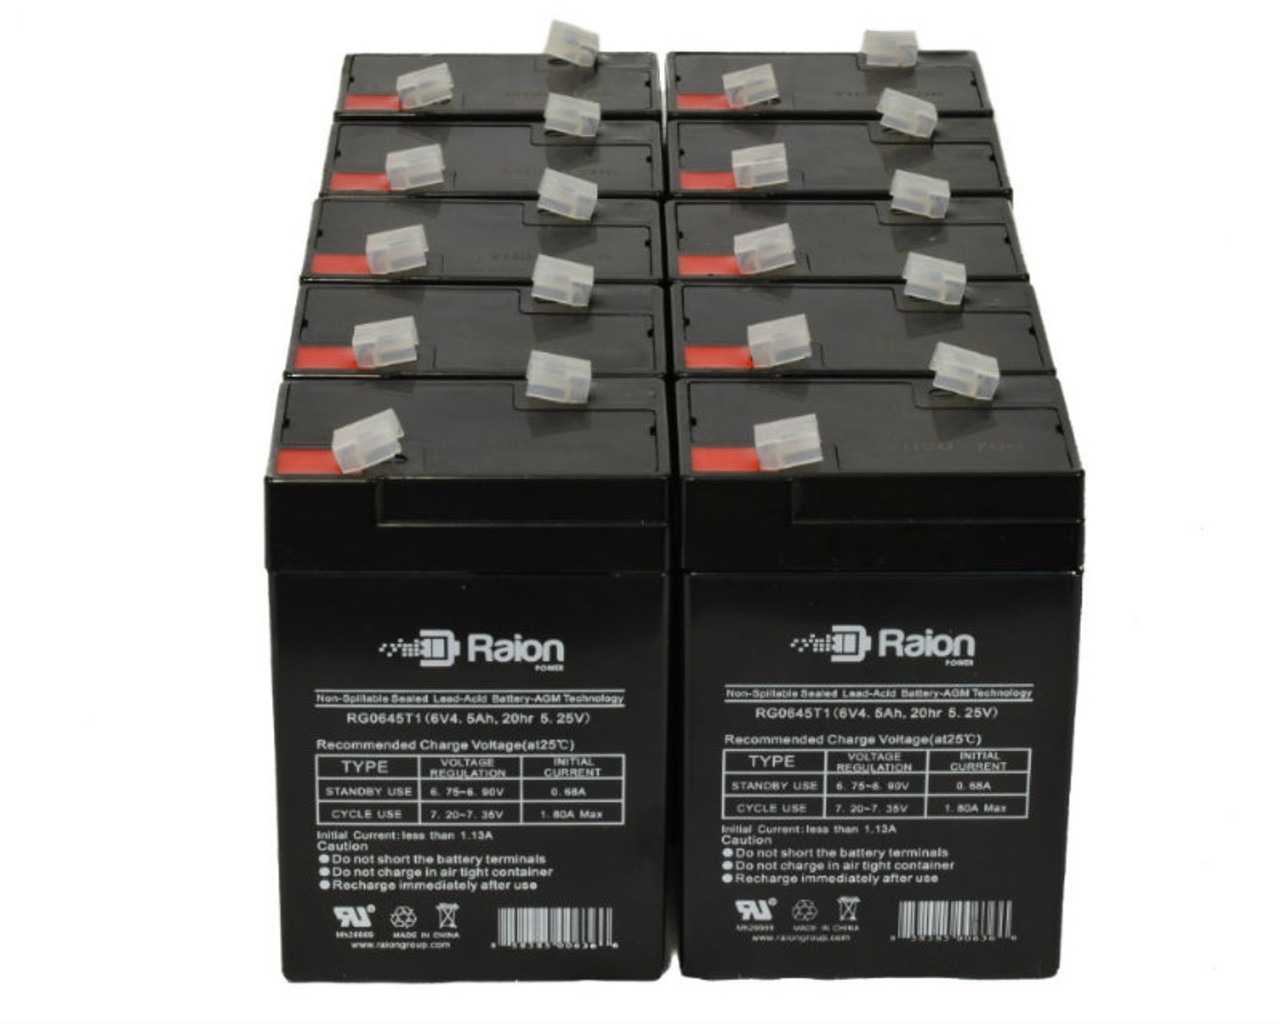 Raion Power 6V 4.5Ah Replacement Emergency Light Battery for Sentry-Lite 640 - 10 Pack